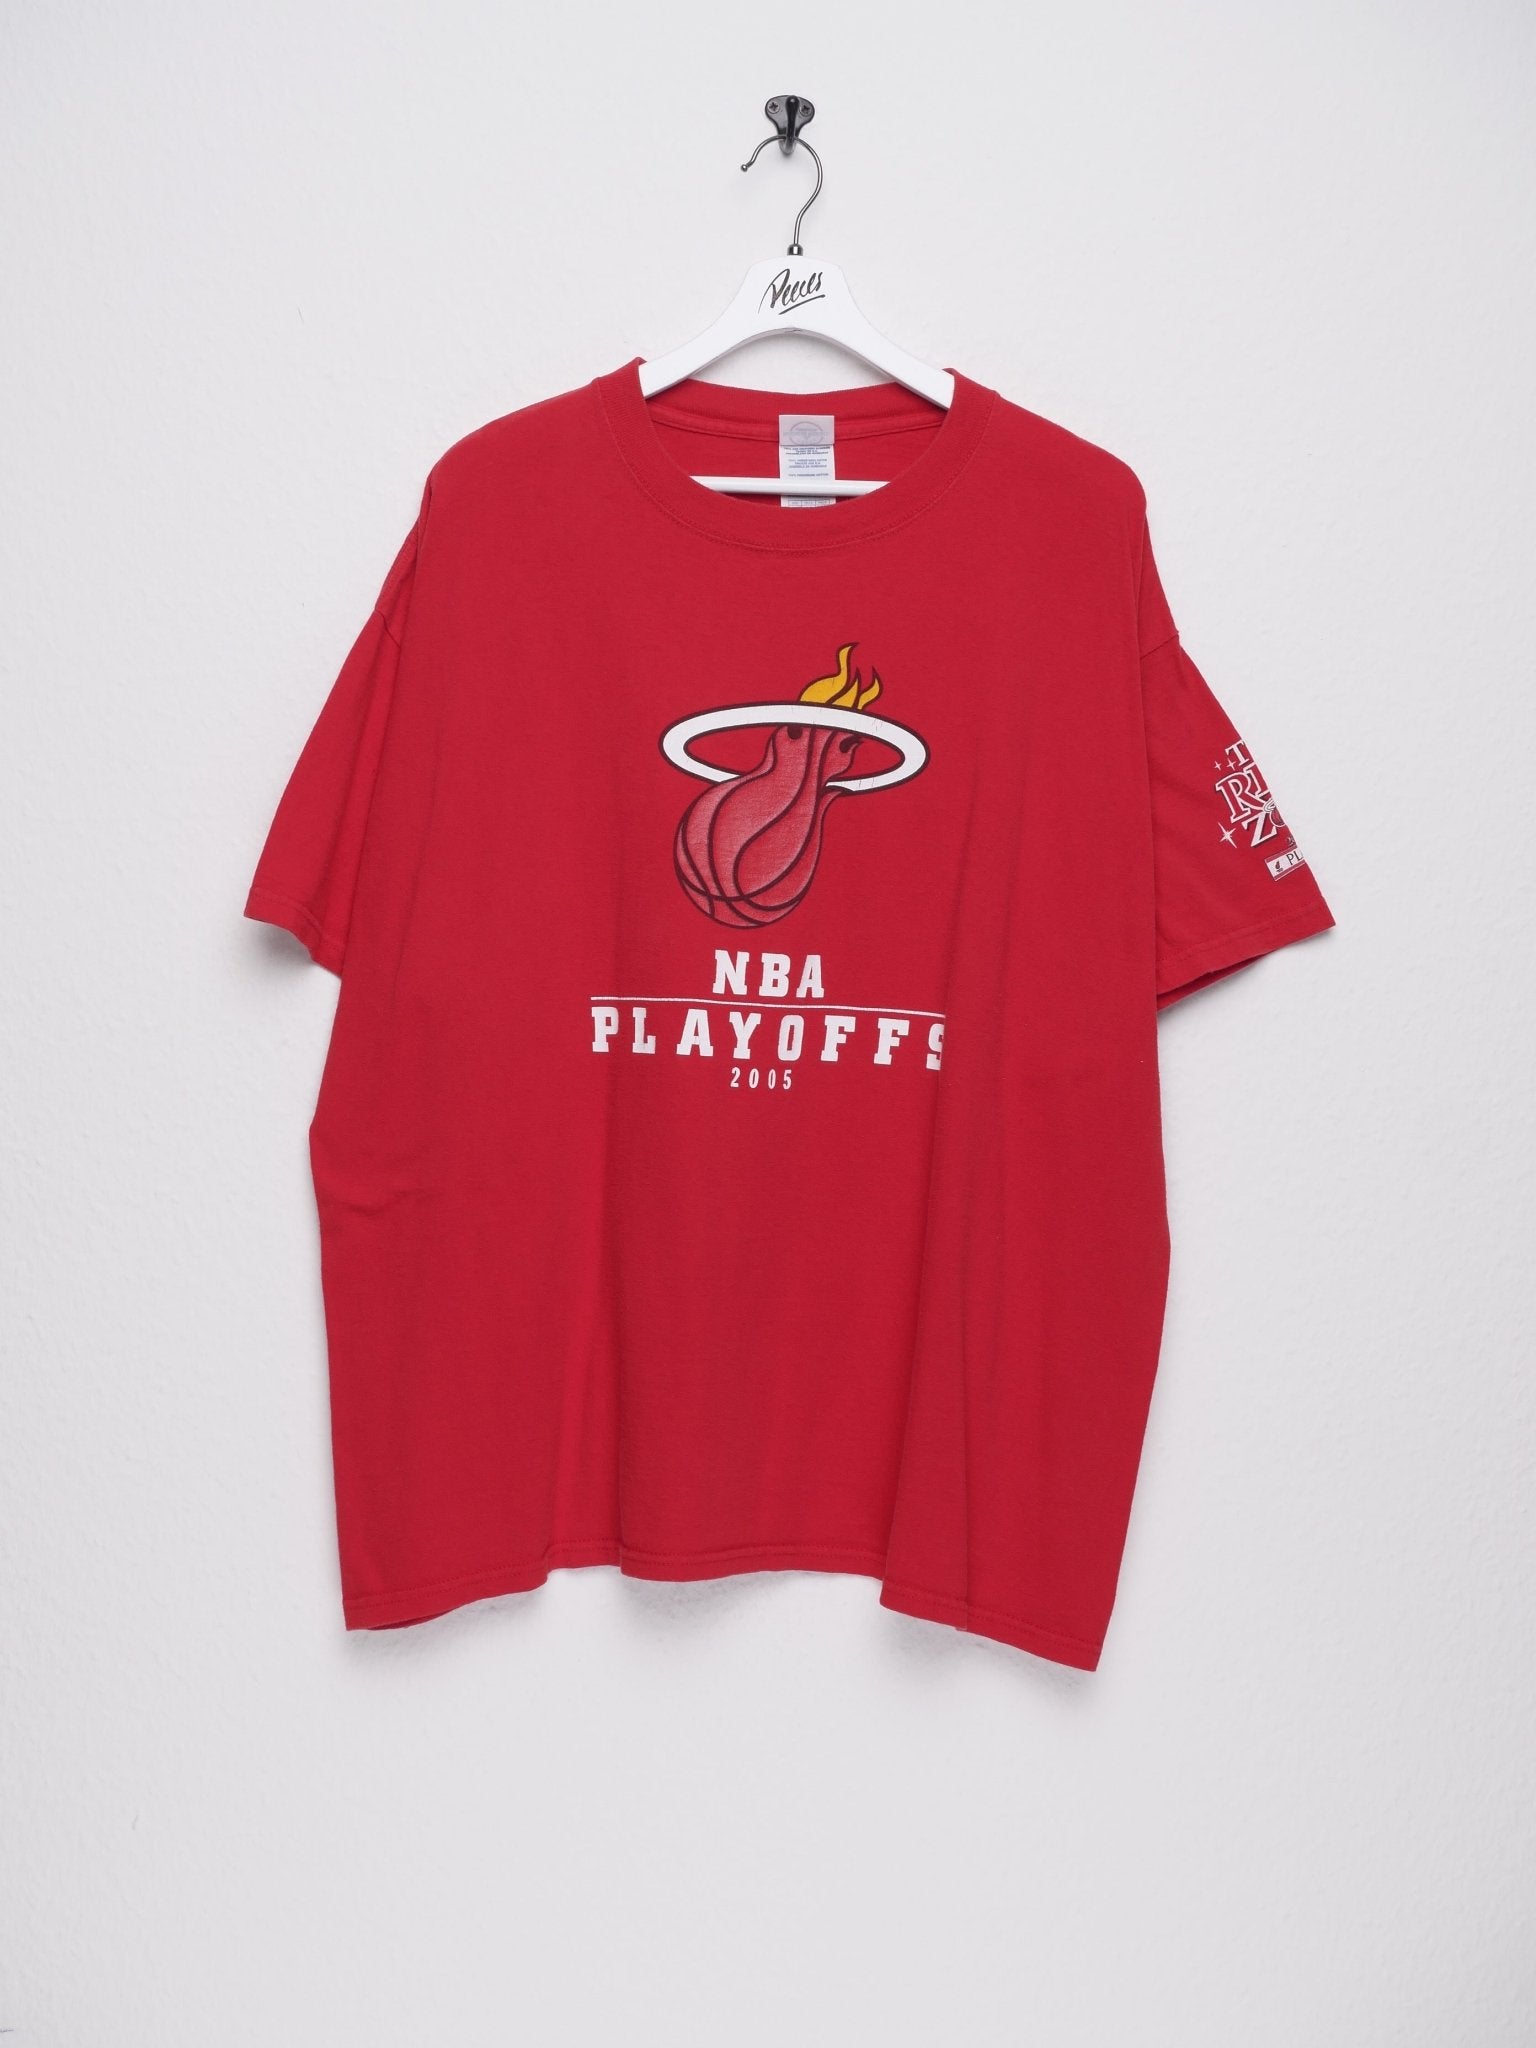 NBA Playoffs 2005 printed Logo Shirt - Peeces